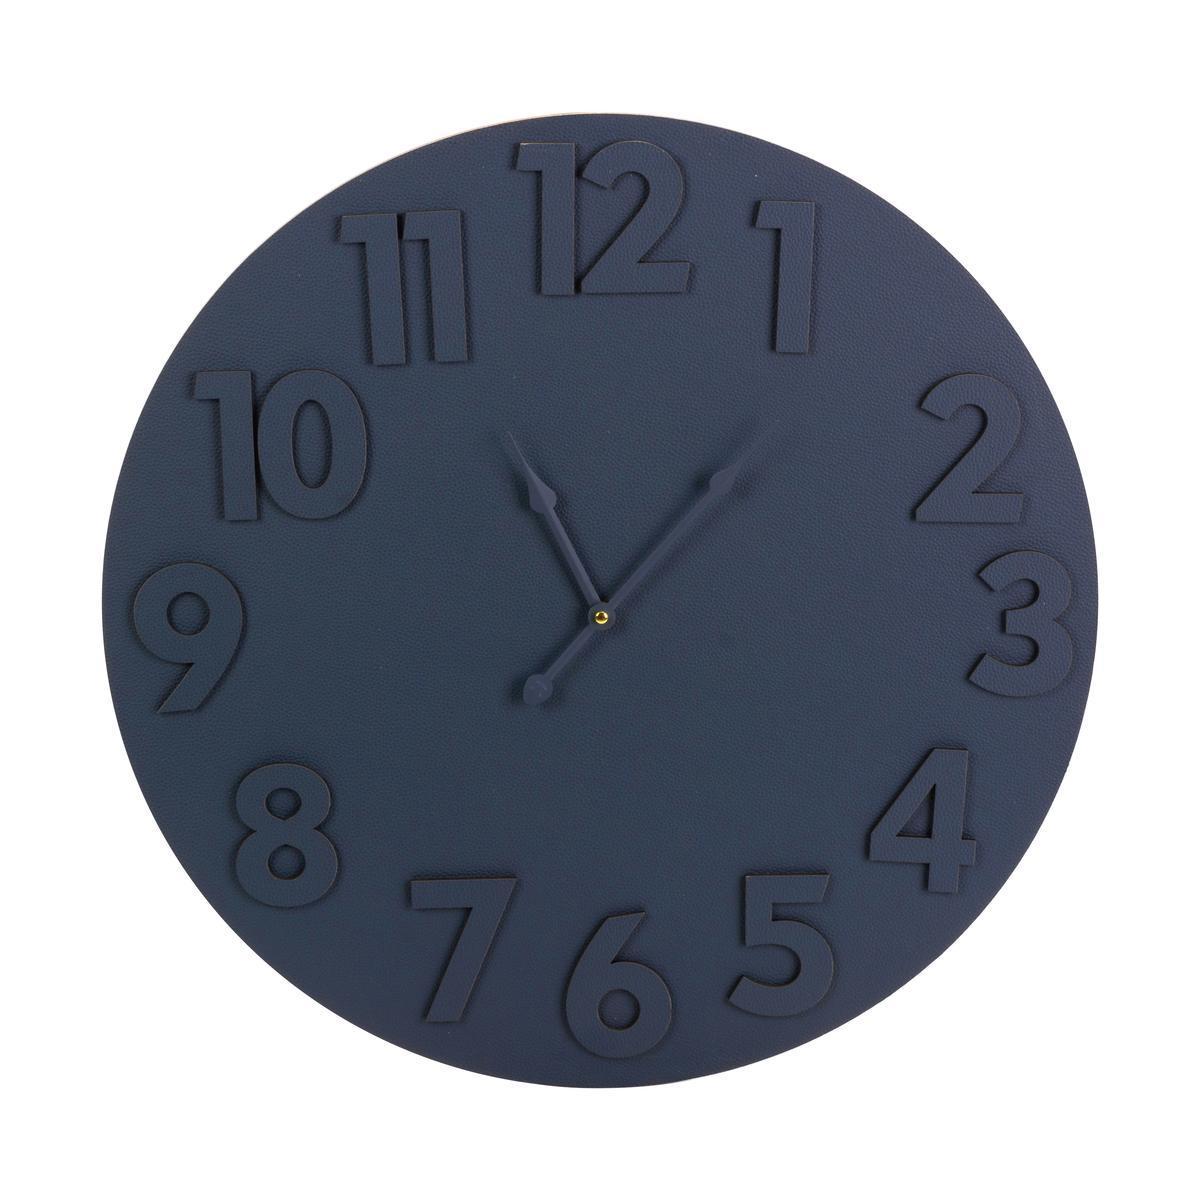 Horloge Urban - ø 62 cm - Différents coloris - Bleu - K.KOON